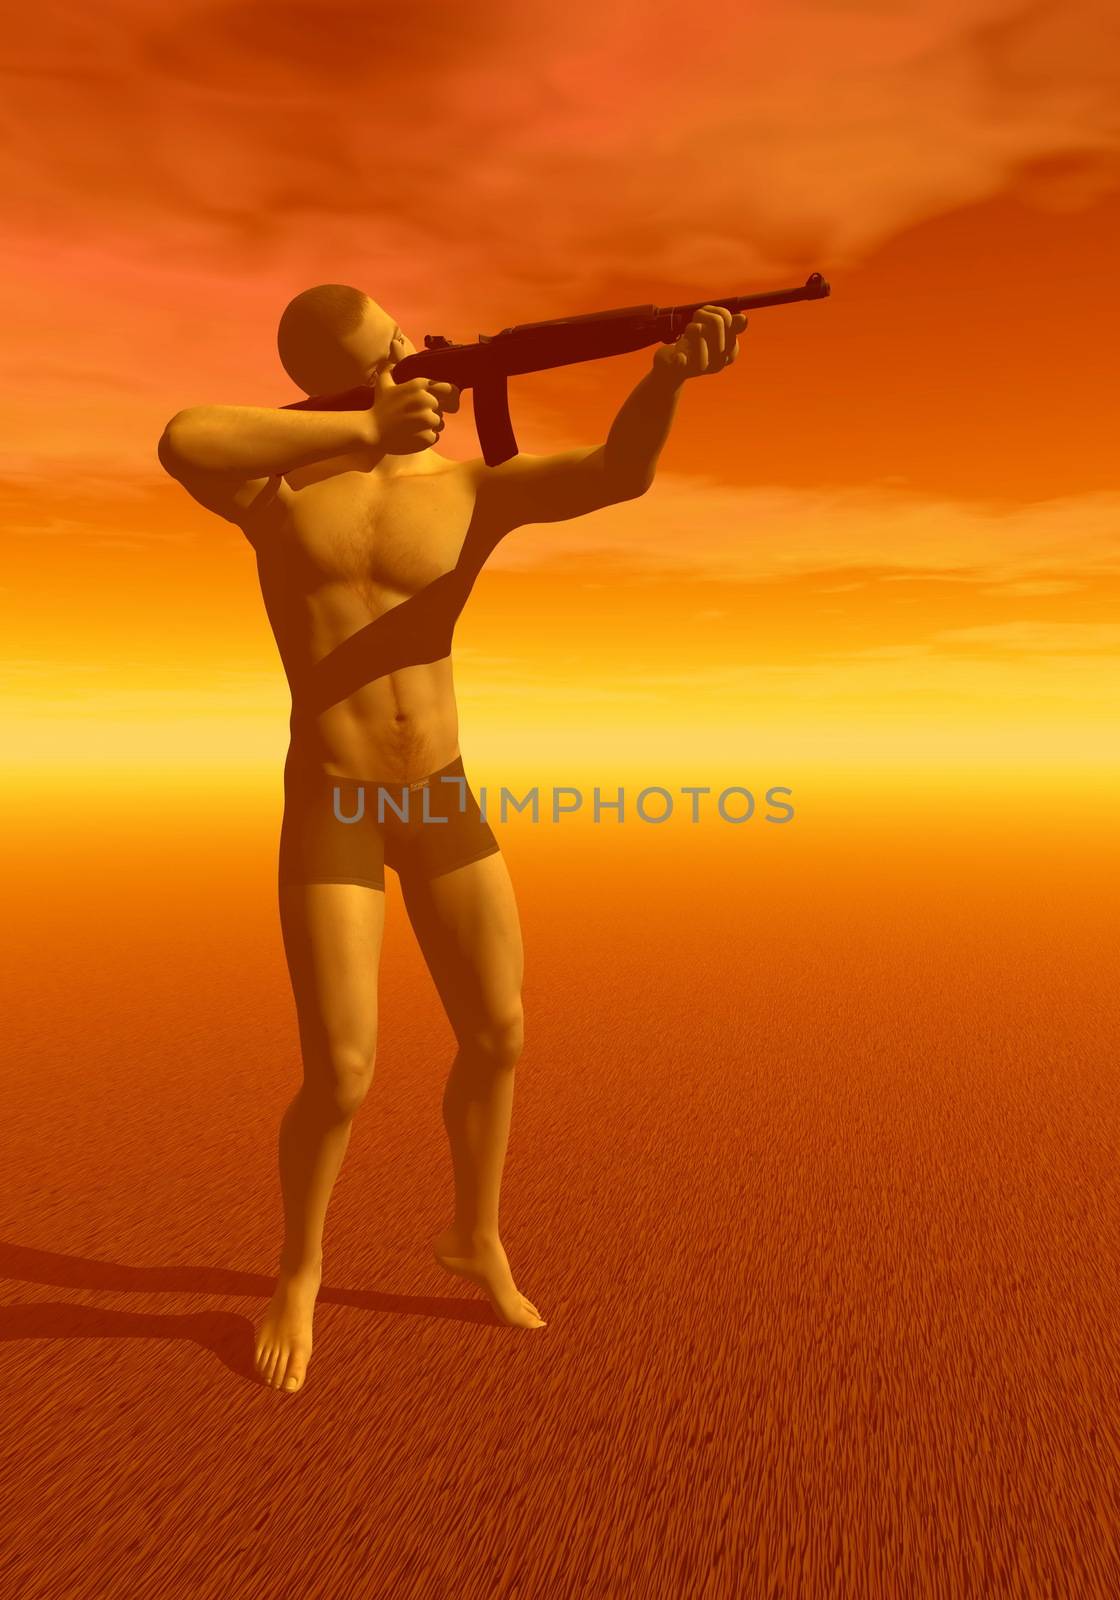 Hunter man holding rifle in orange sunset background